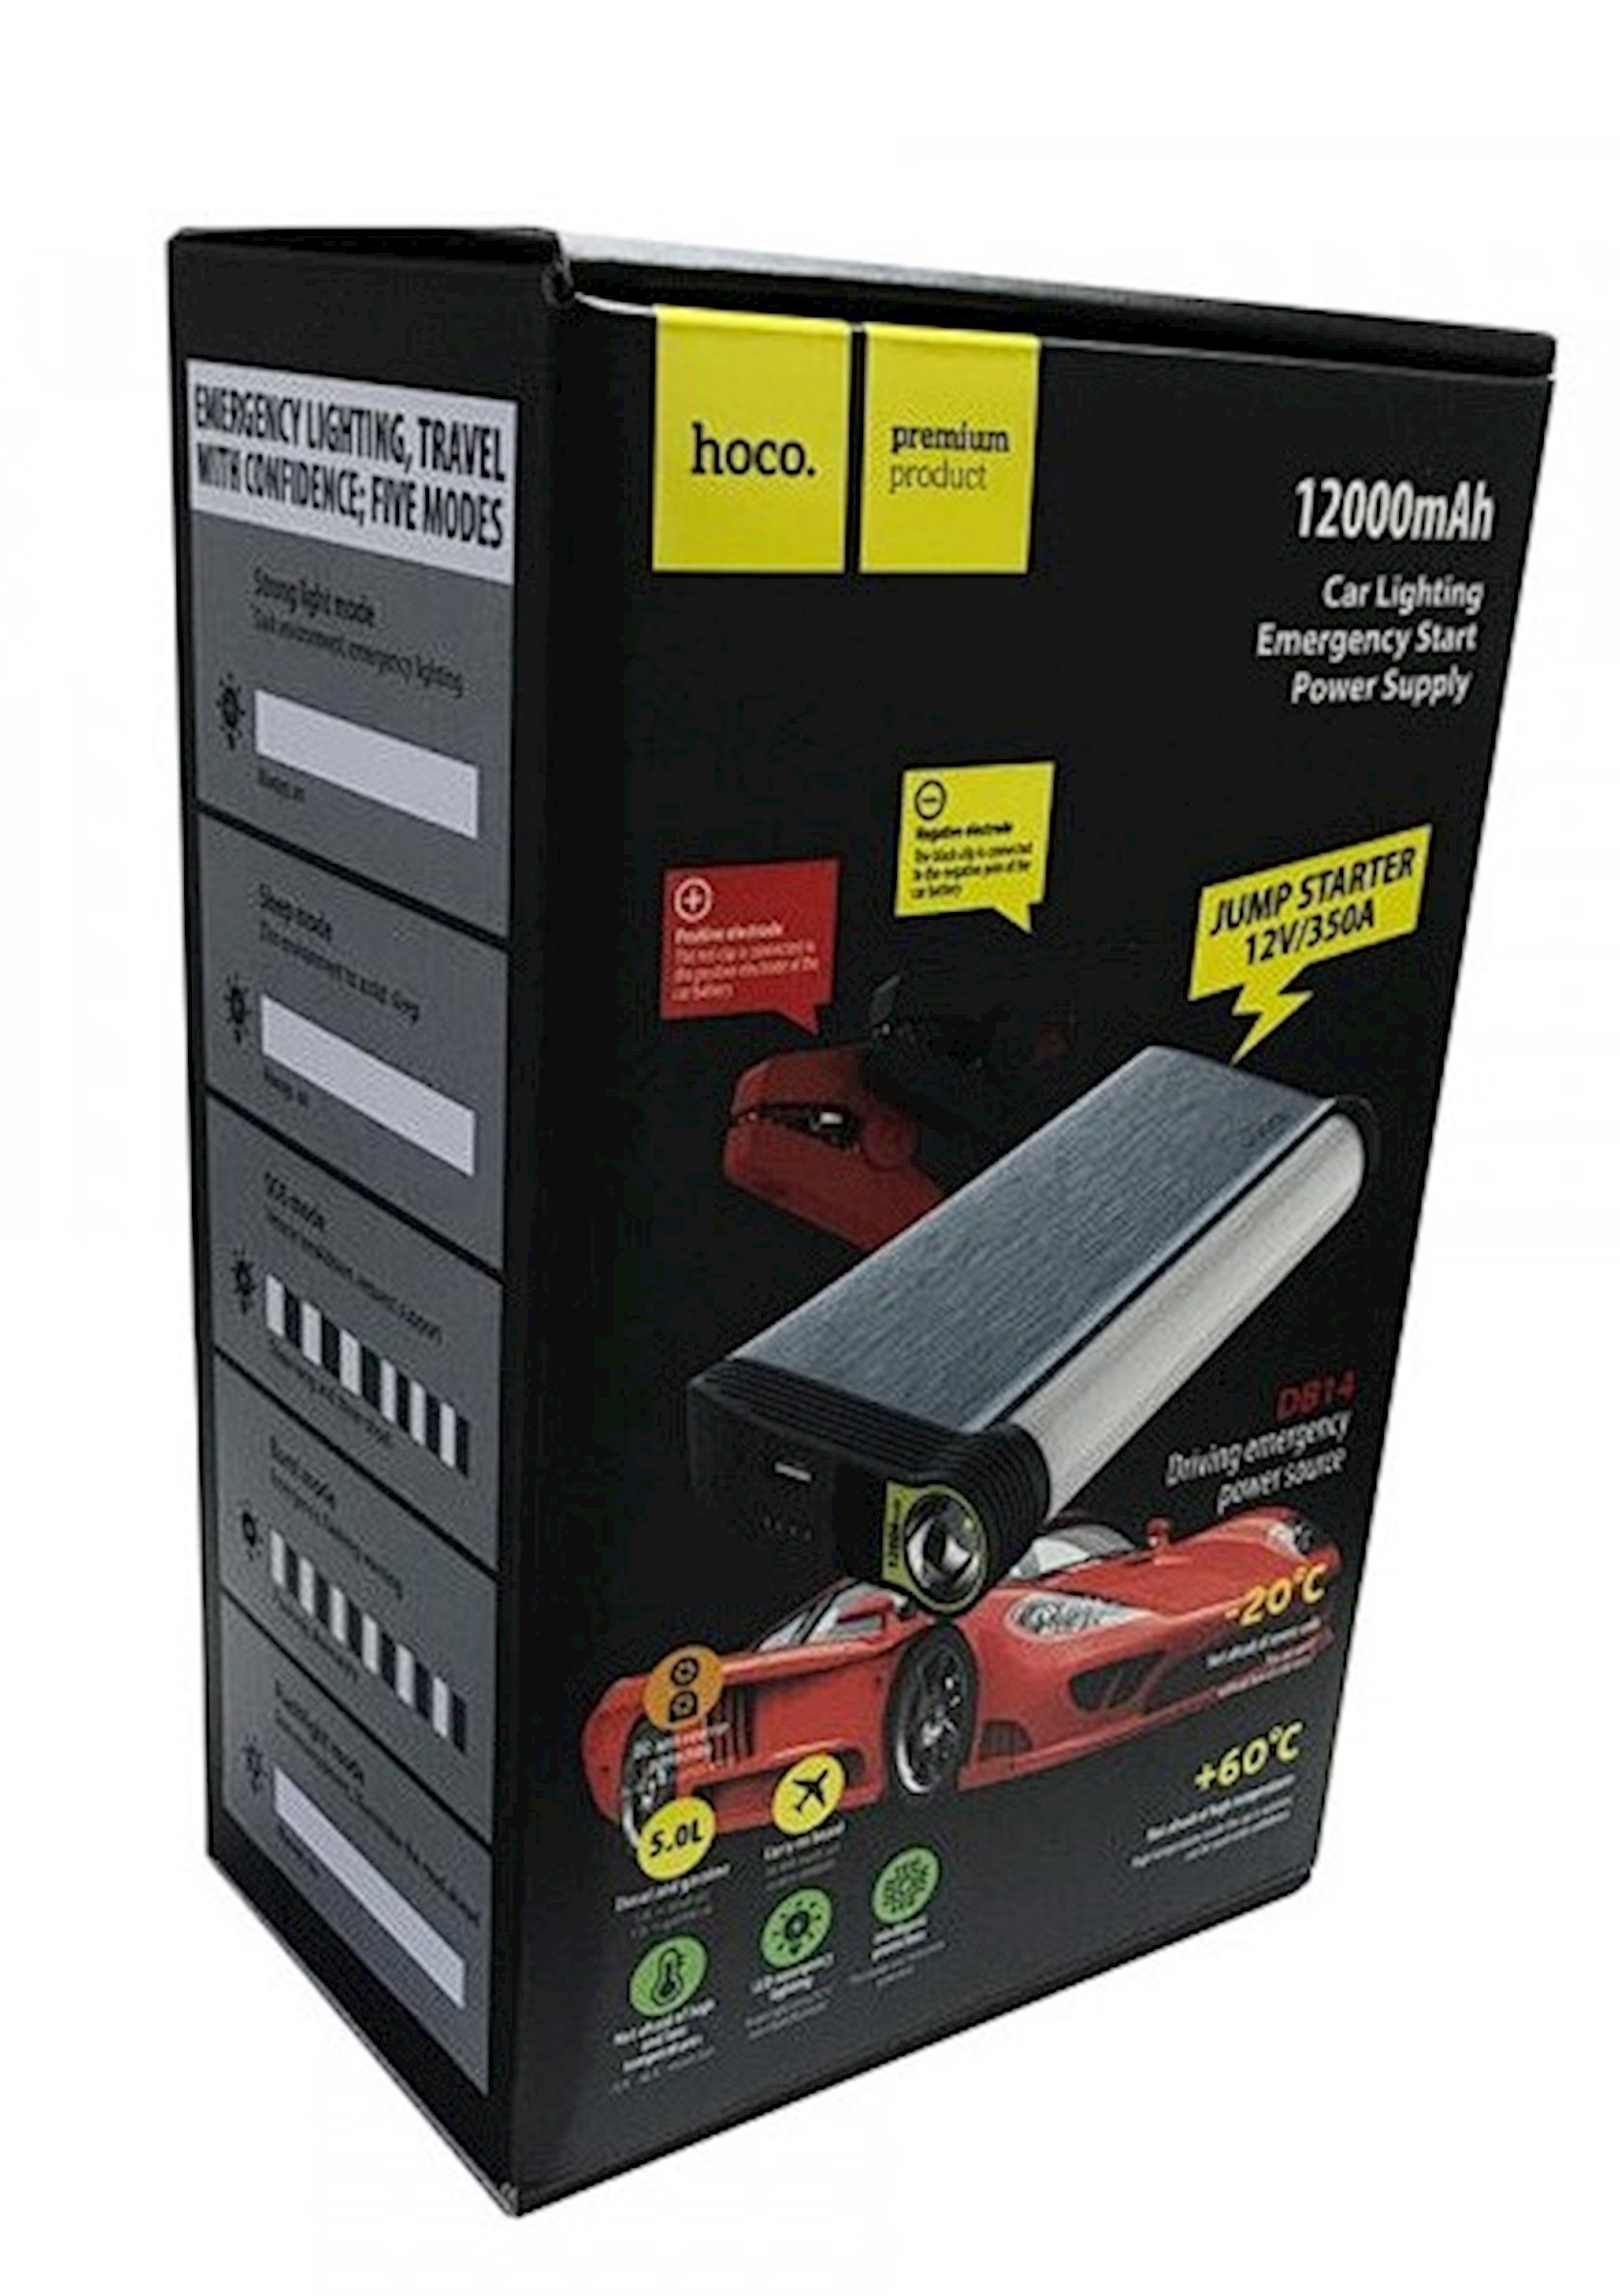 Hoco DB14 12000mAh Car Lighting Emergency Start Power Supply